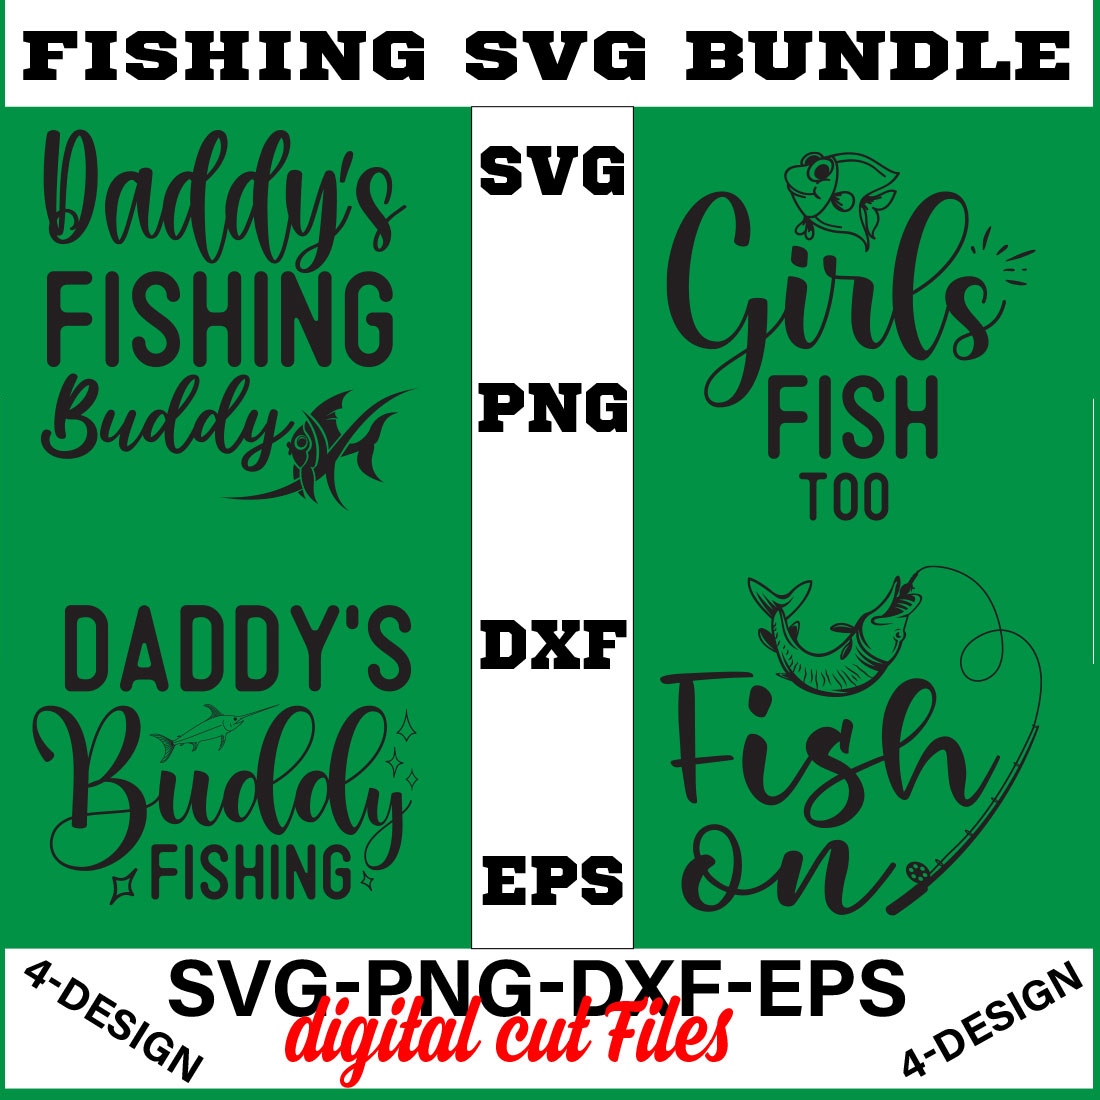 Fishing Design Bundle PNG ONLY, SVG bundle, Fishing svg, Fishing life Volume-01 cover image.